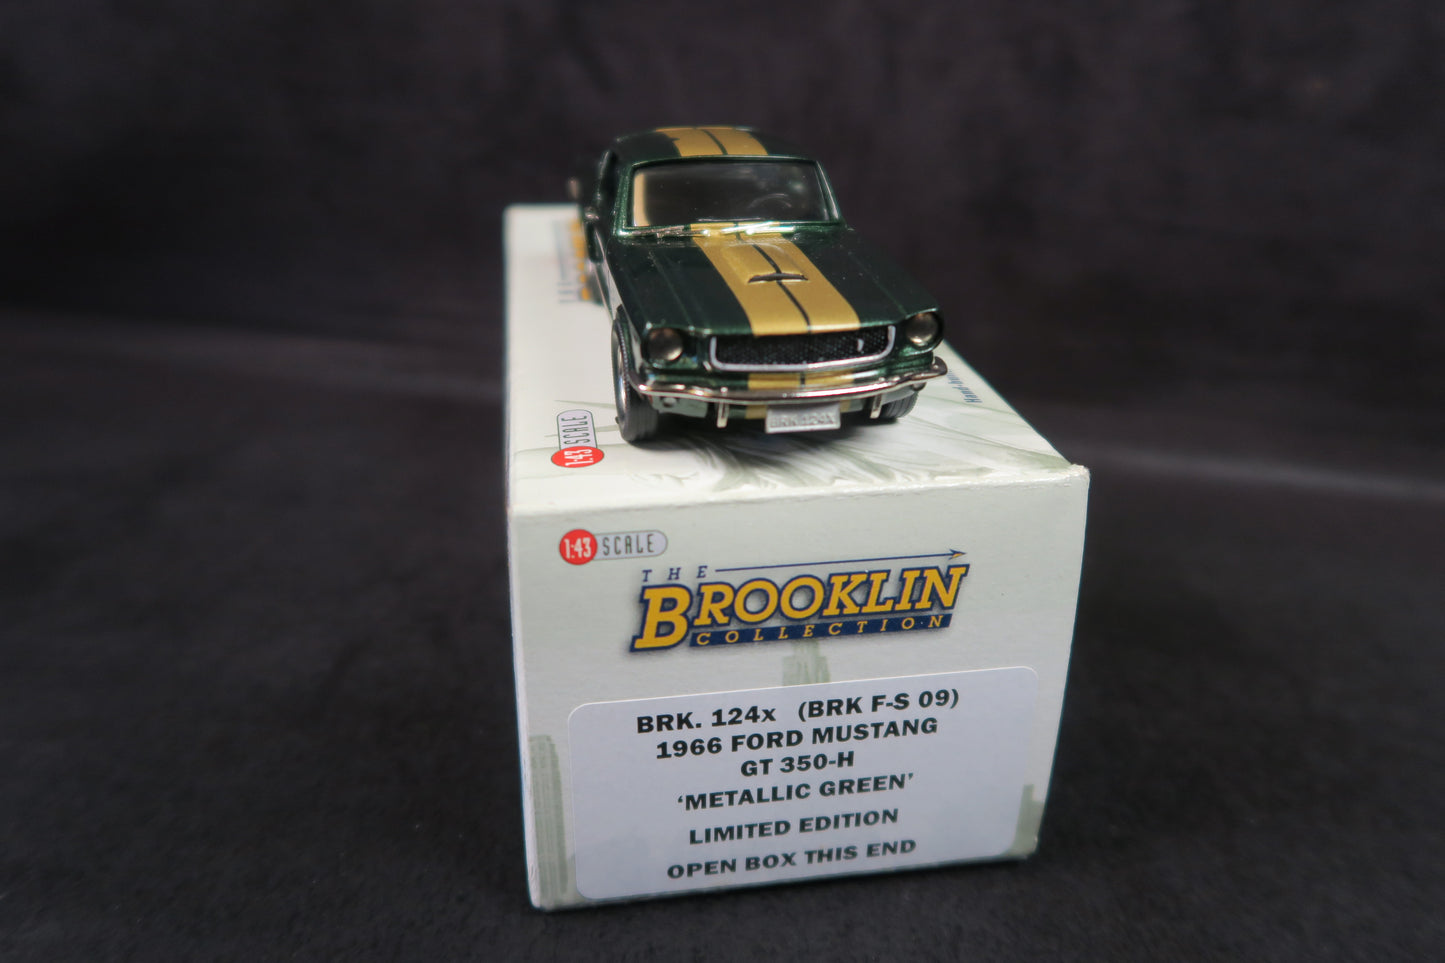 Brooklin Models BRK.124x (BRK F-S 09) 1966 Ford Mustang GT 350-H 'Metallic Green', 1/43, 99%Mint/Boxed!